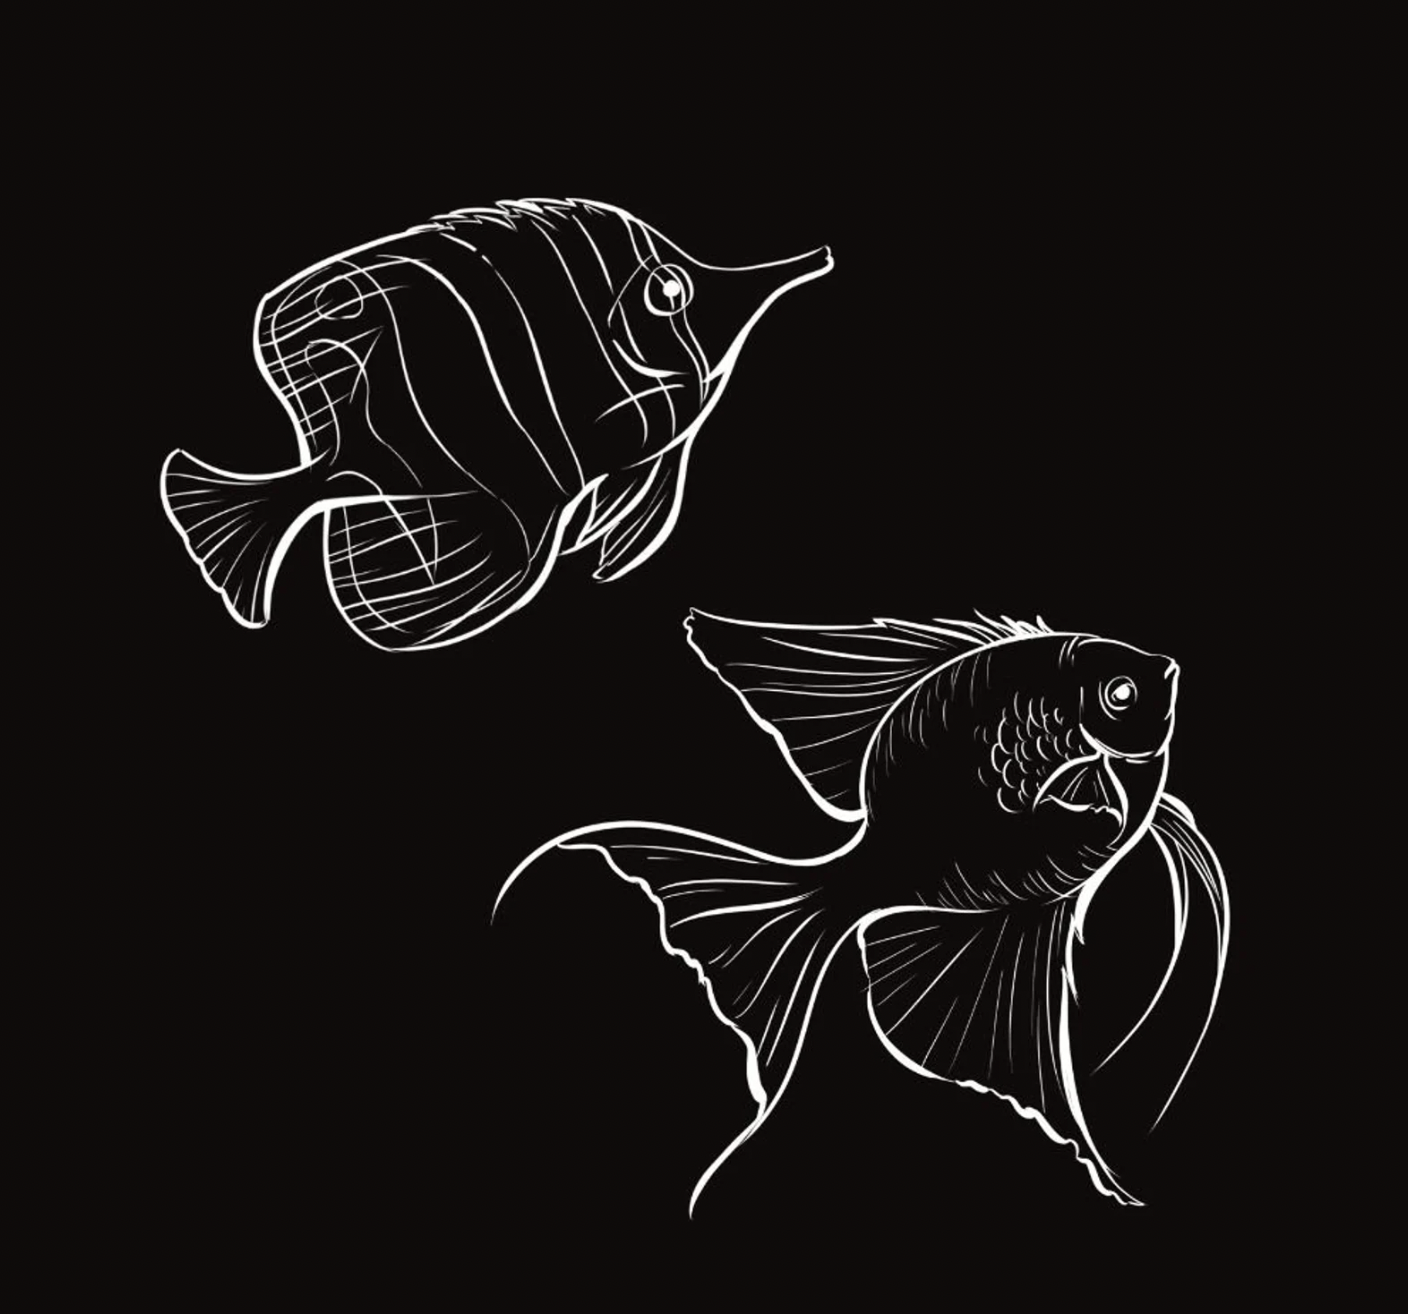 Line art fish contour Royalty Free Vector Image